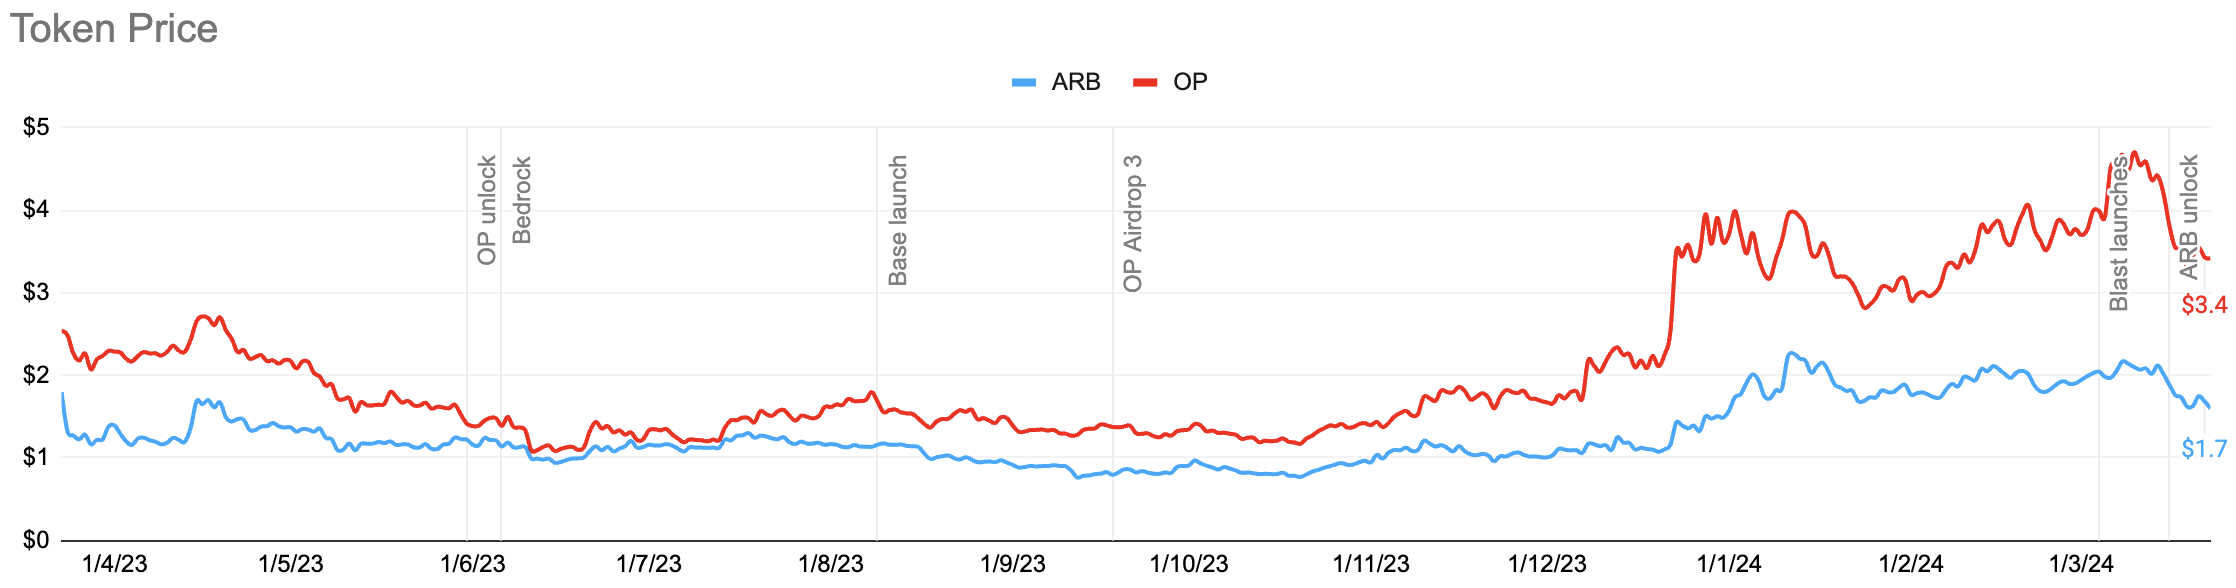 Price comparison between ARB and OP. Source: Coinmarketcap (https://coinmarketcap.com/currencies/arbitrum/historical-data/ and https://coinmarketcap.com/currencies/optimism-ethereum/historical-data/)